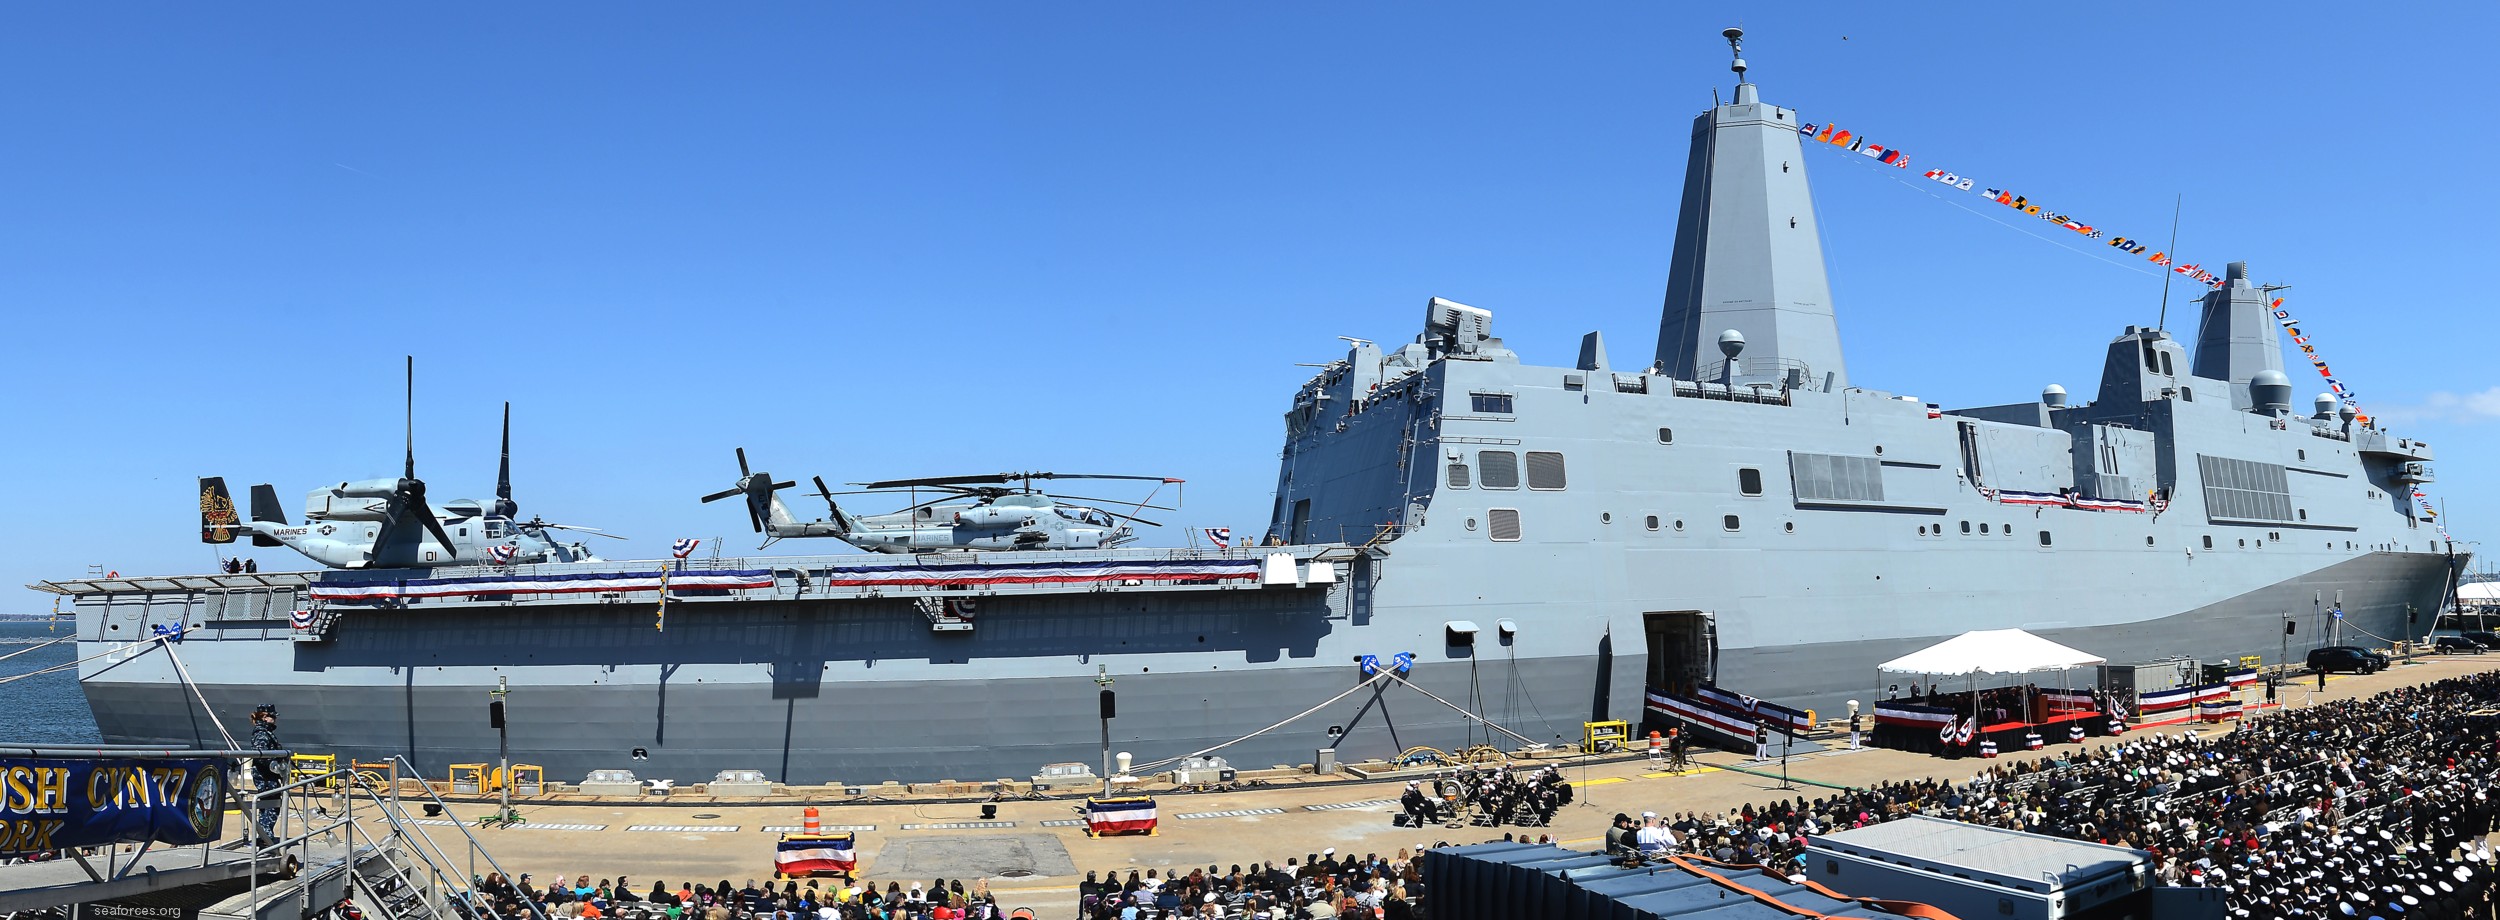 lpd-24 uss arlington amphibious transport dock landing ship us navy commissioning ceremony norfolk 54